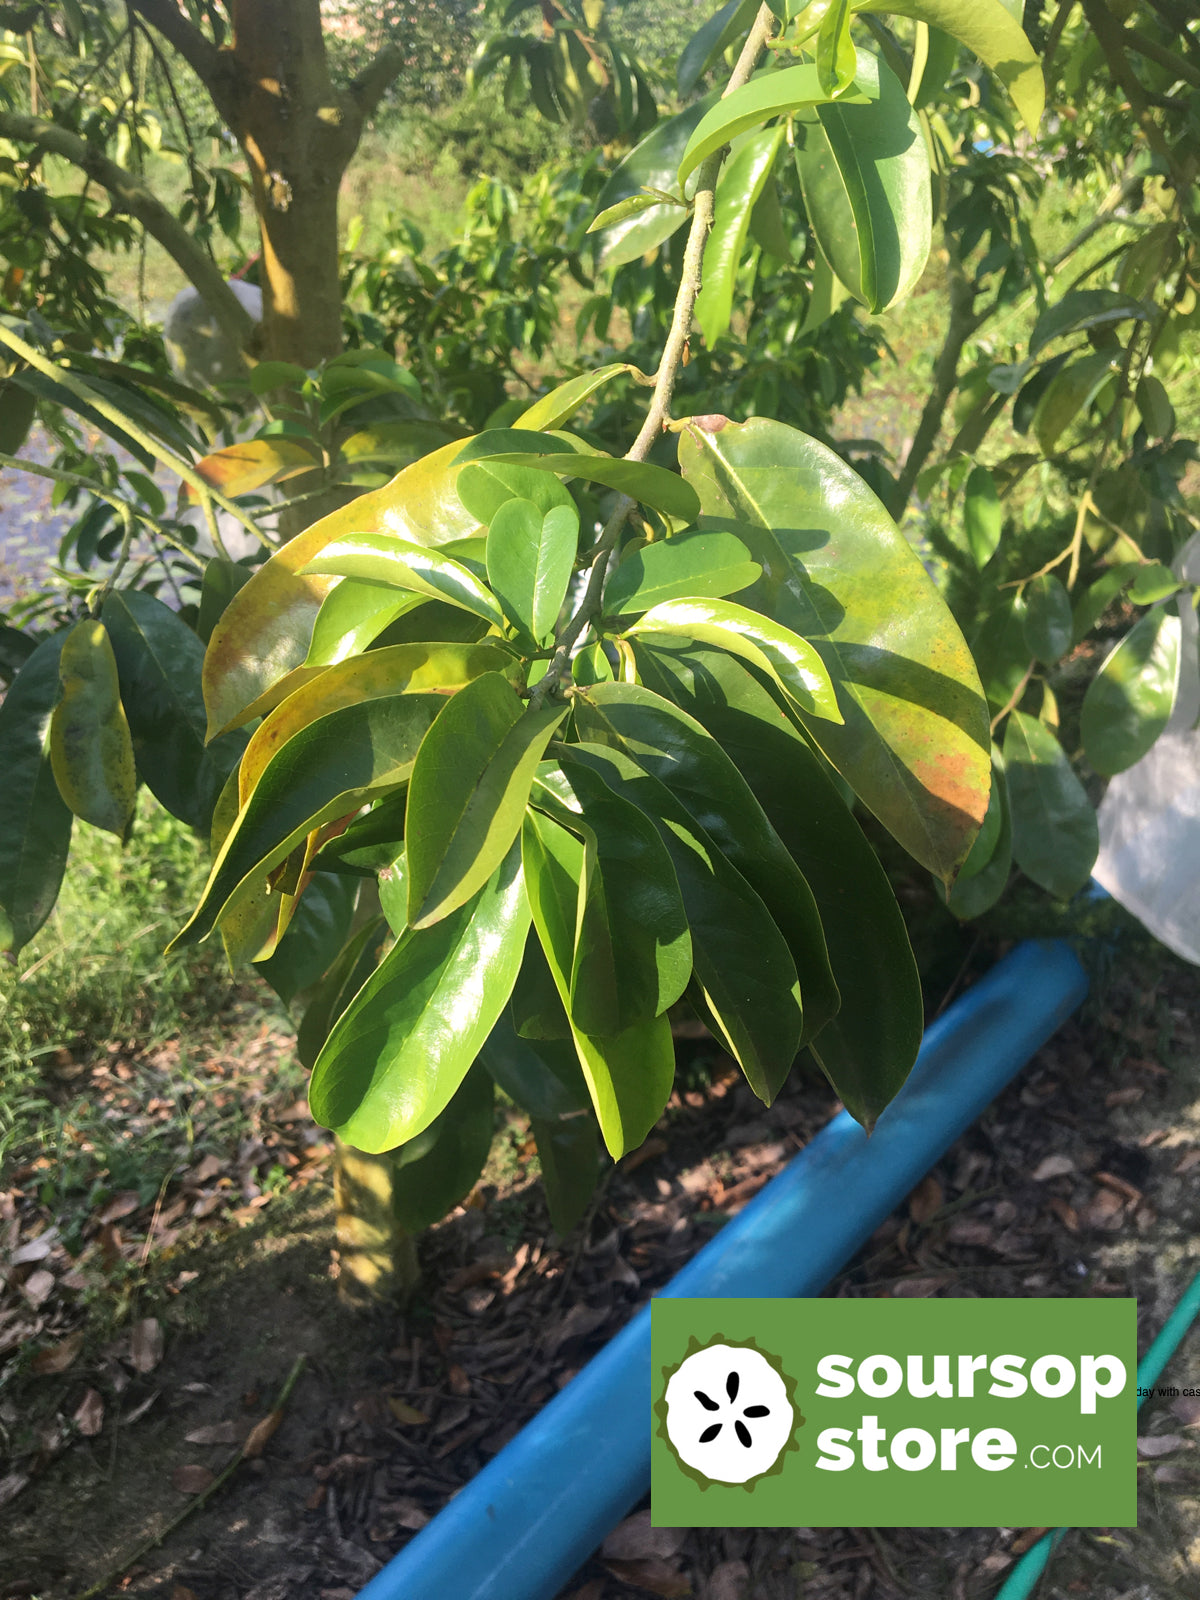 Bulk premium whole soursop leaf 1 lb / 453g from Peru